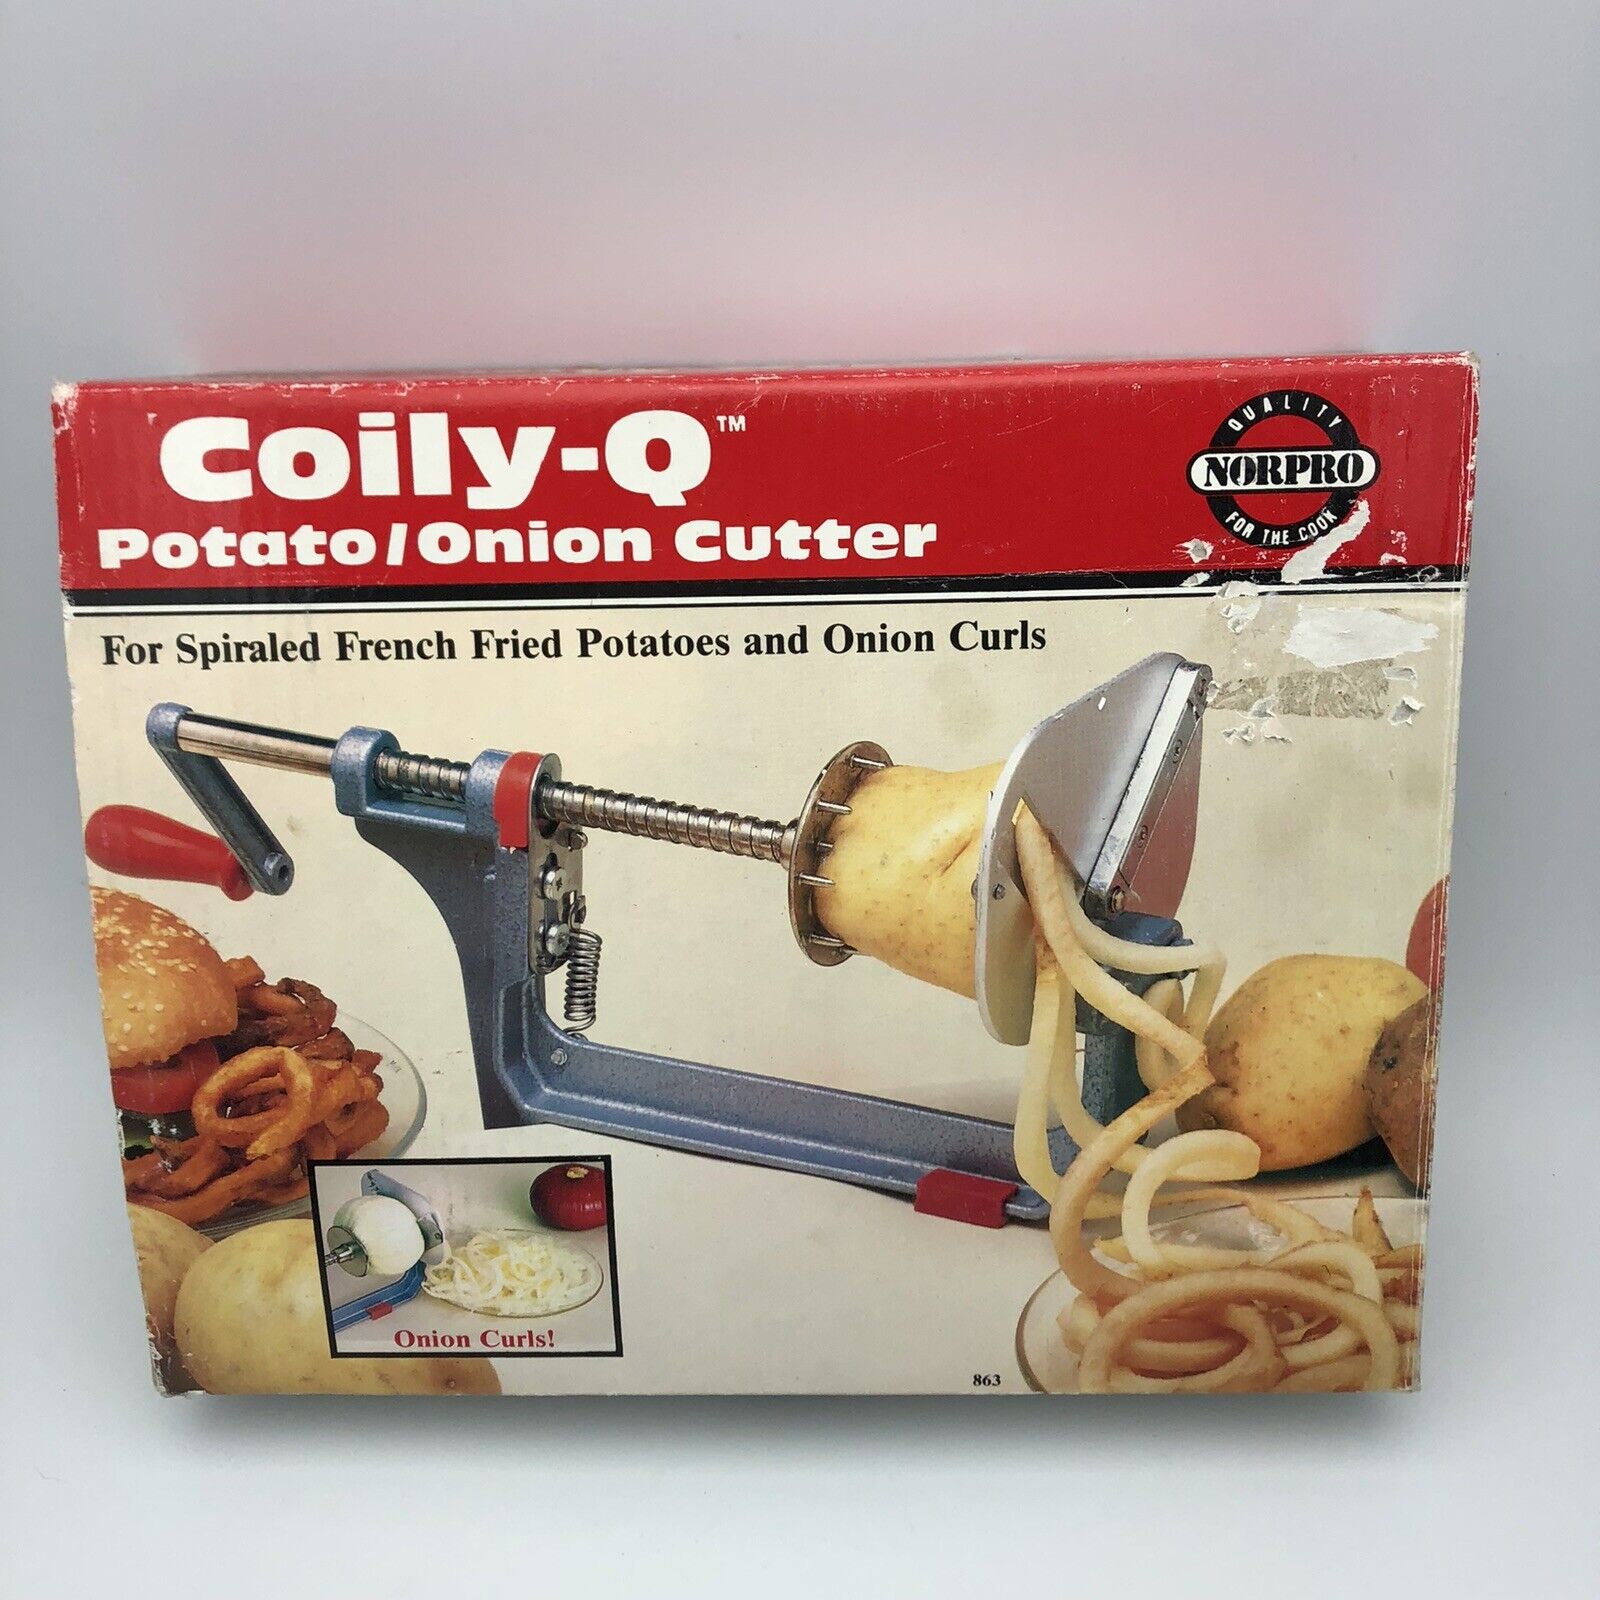 Vintage NORPRO Coily-Q Potato/Onion Metal Cutter #863 in Original Box Old Stock